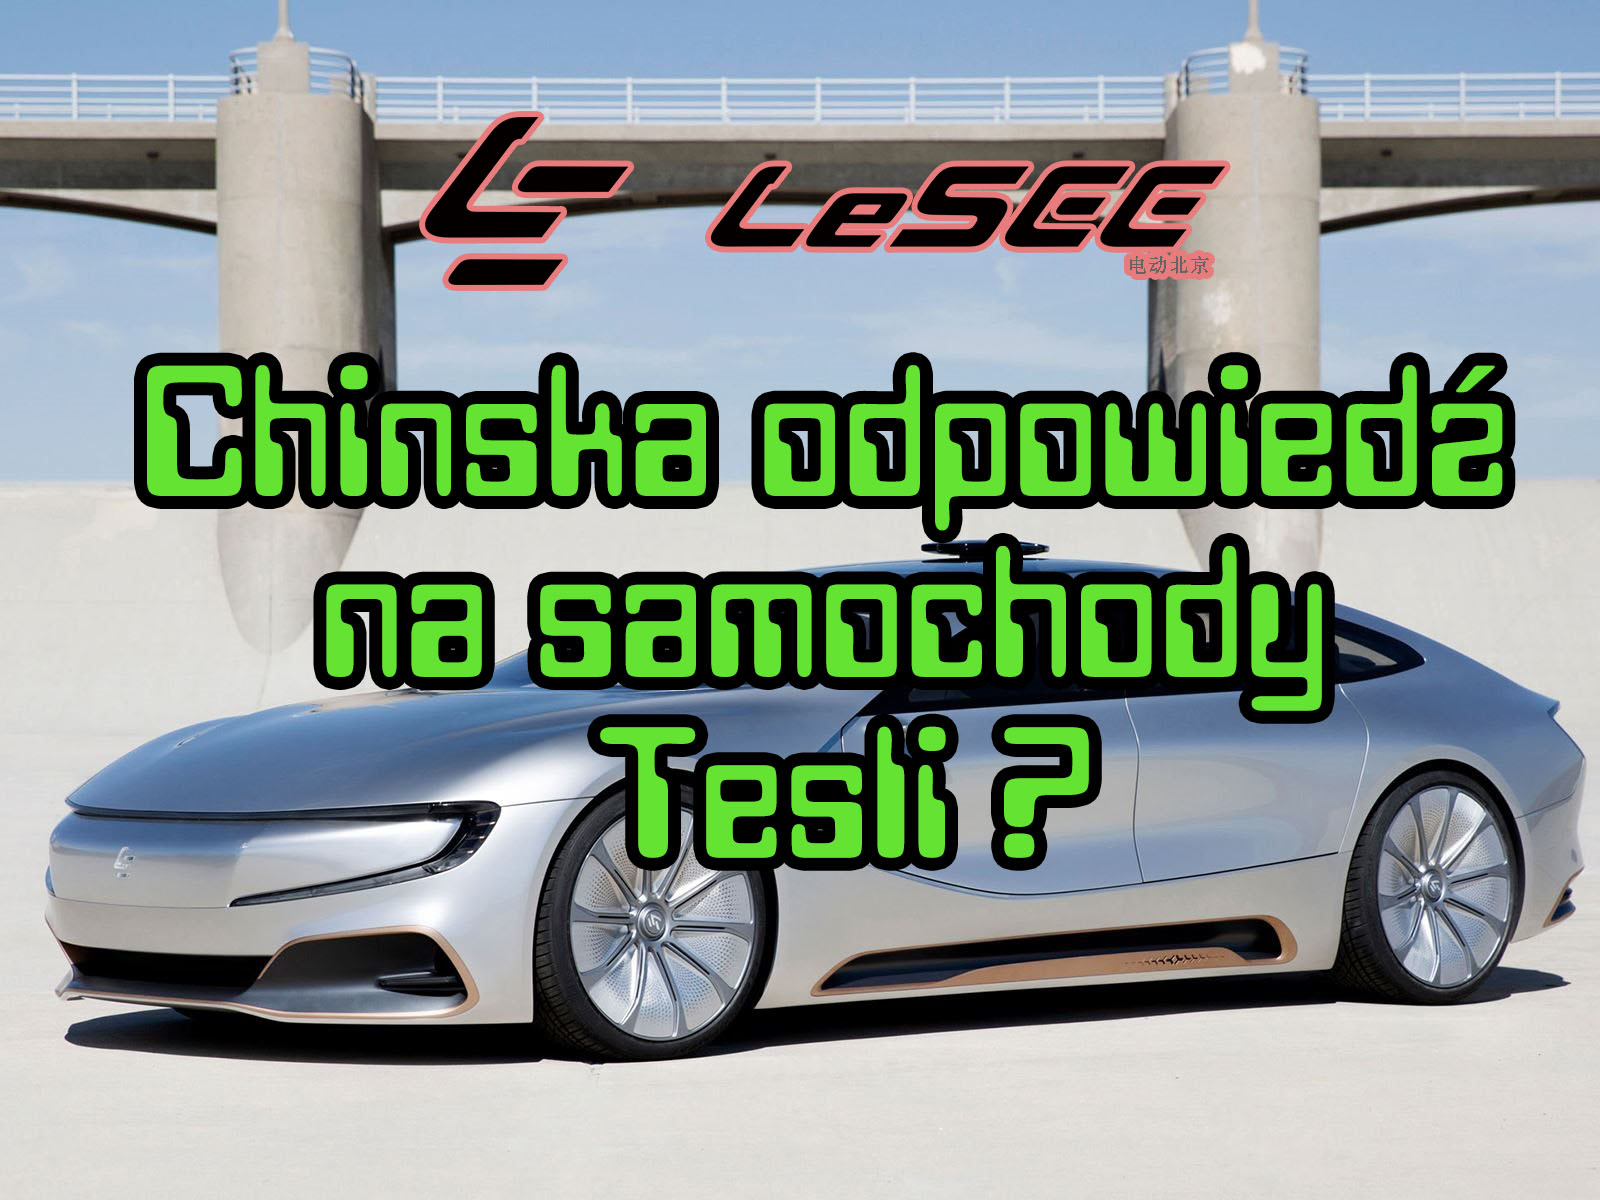 LeSEE – Chinska odpowiedź na samochody Tesli?